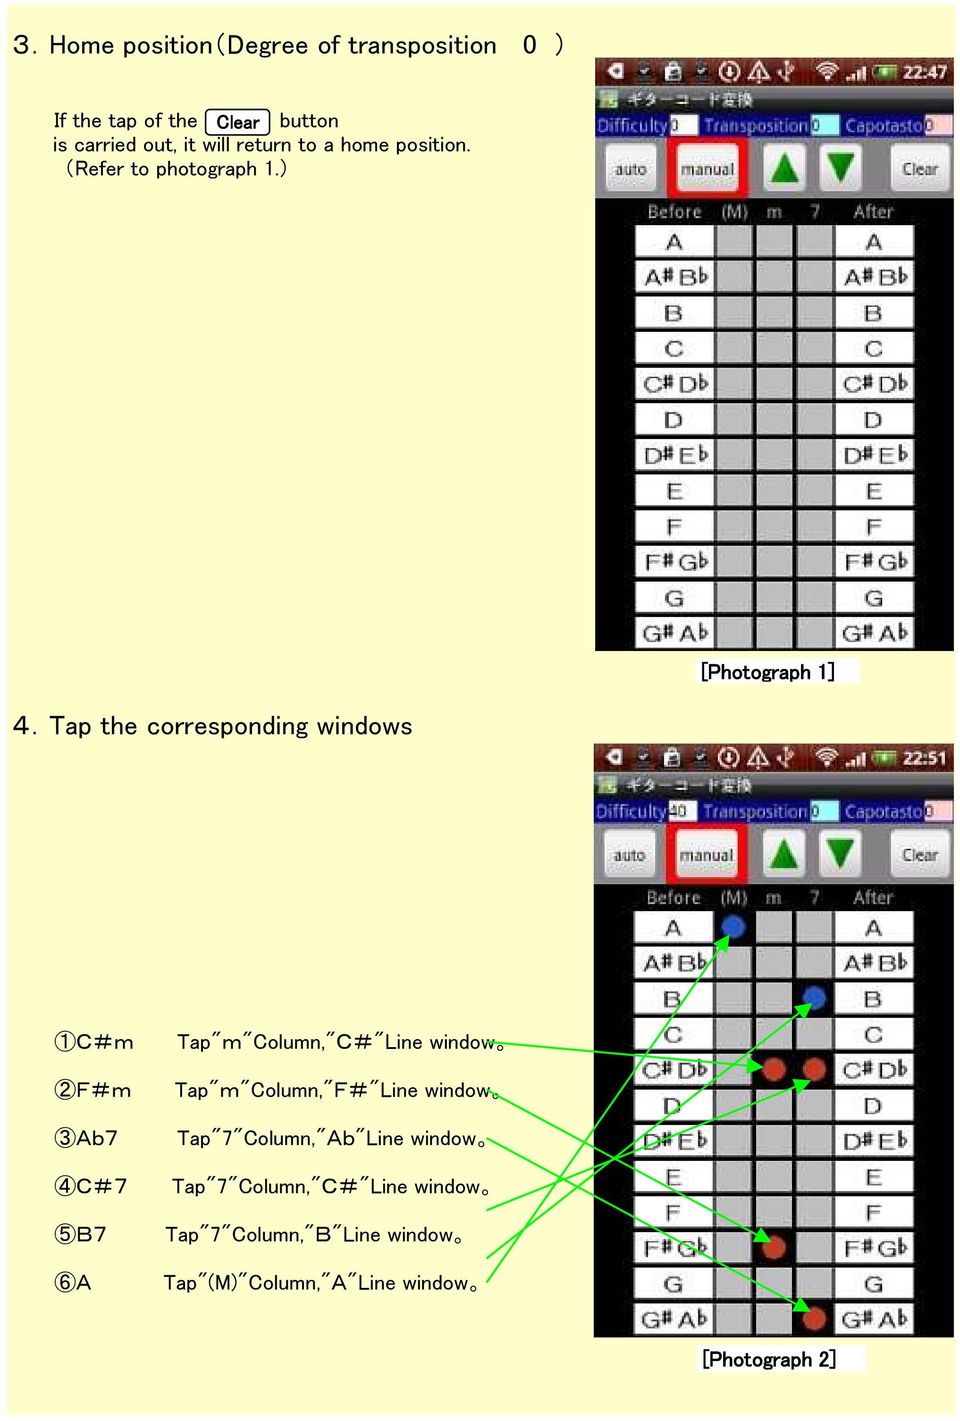 Tap the corresponding windows 1C#m 2F#m 3Ab7 4C#7 5B7 6A Tap"m"Column,"C#"Line window